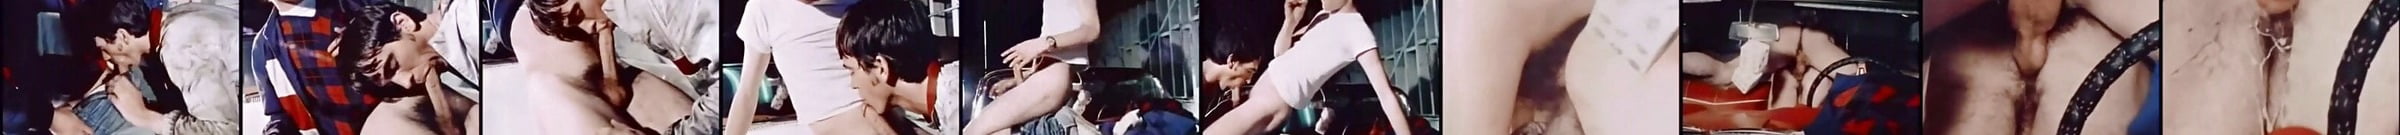 Vintage Oral Sex Scene Free Gay Porn Video 6f Xhamster